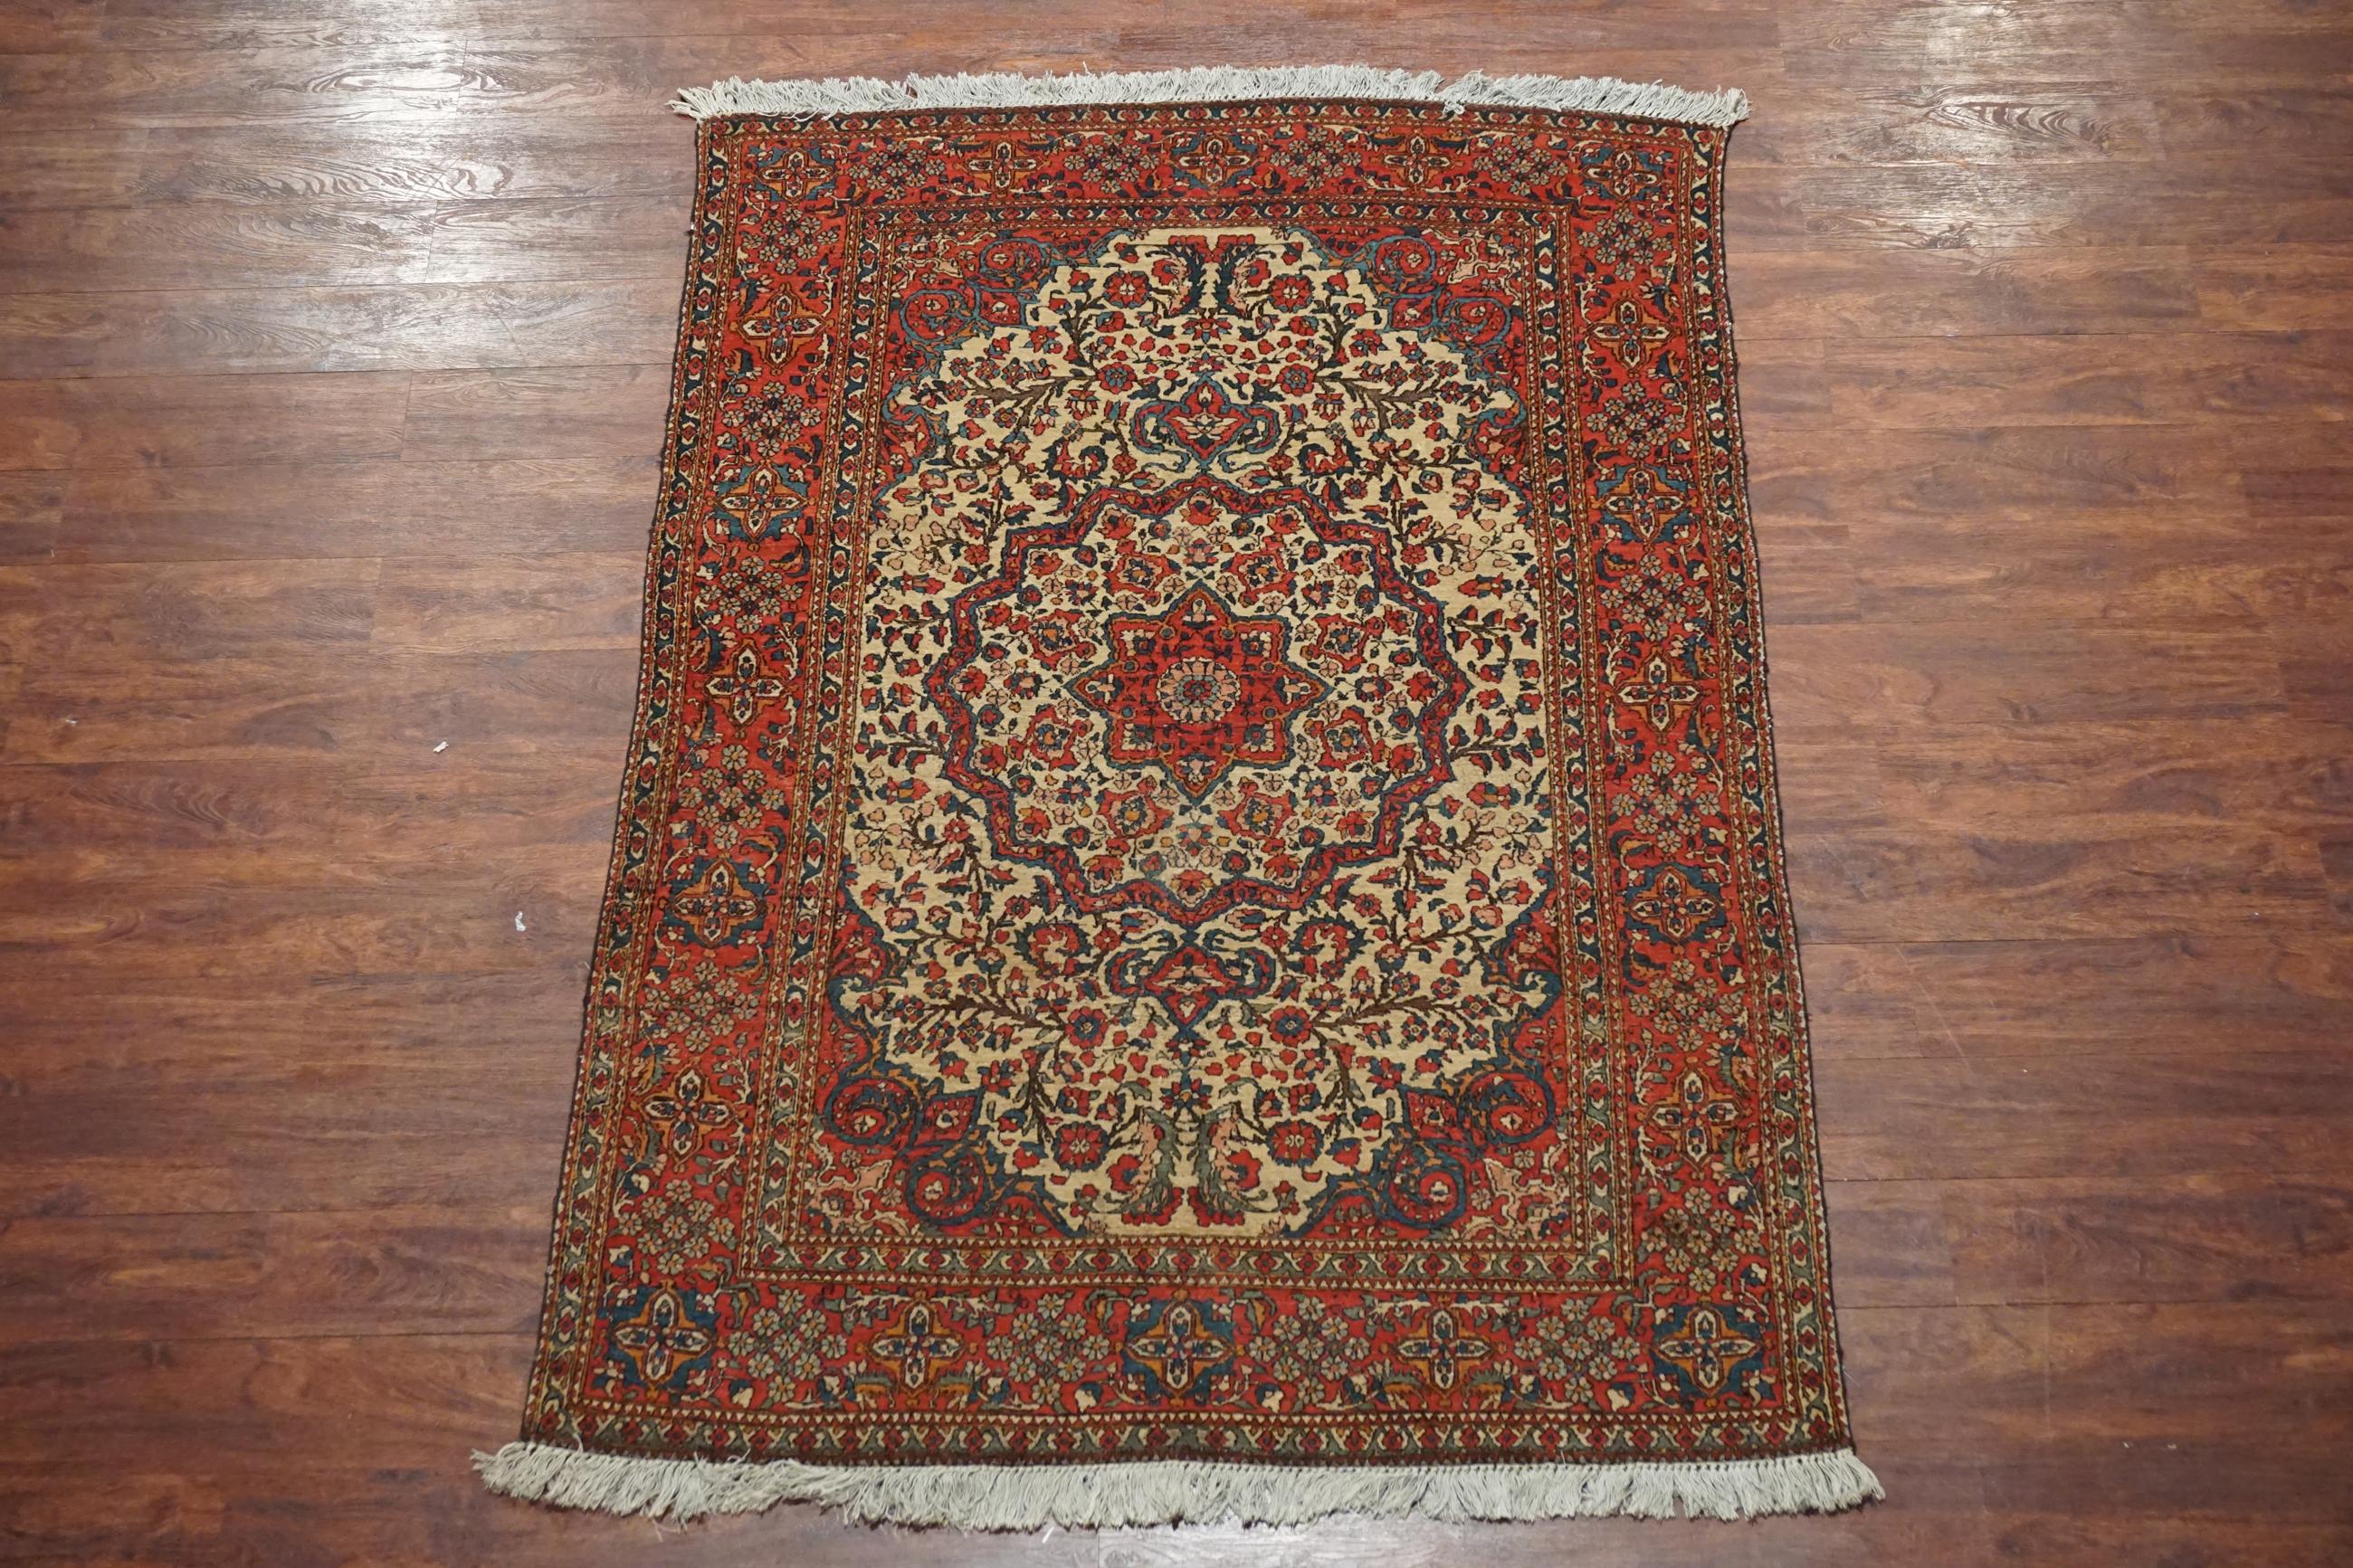 Antique Persian Isfahan rug,

circa 1900

Measures: 4' 6